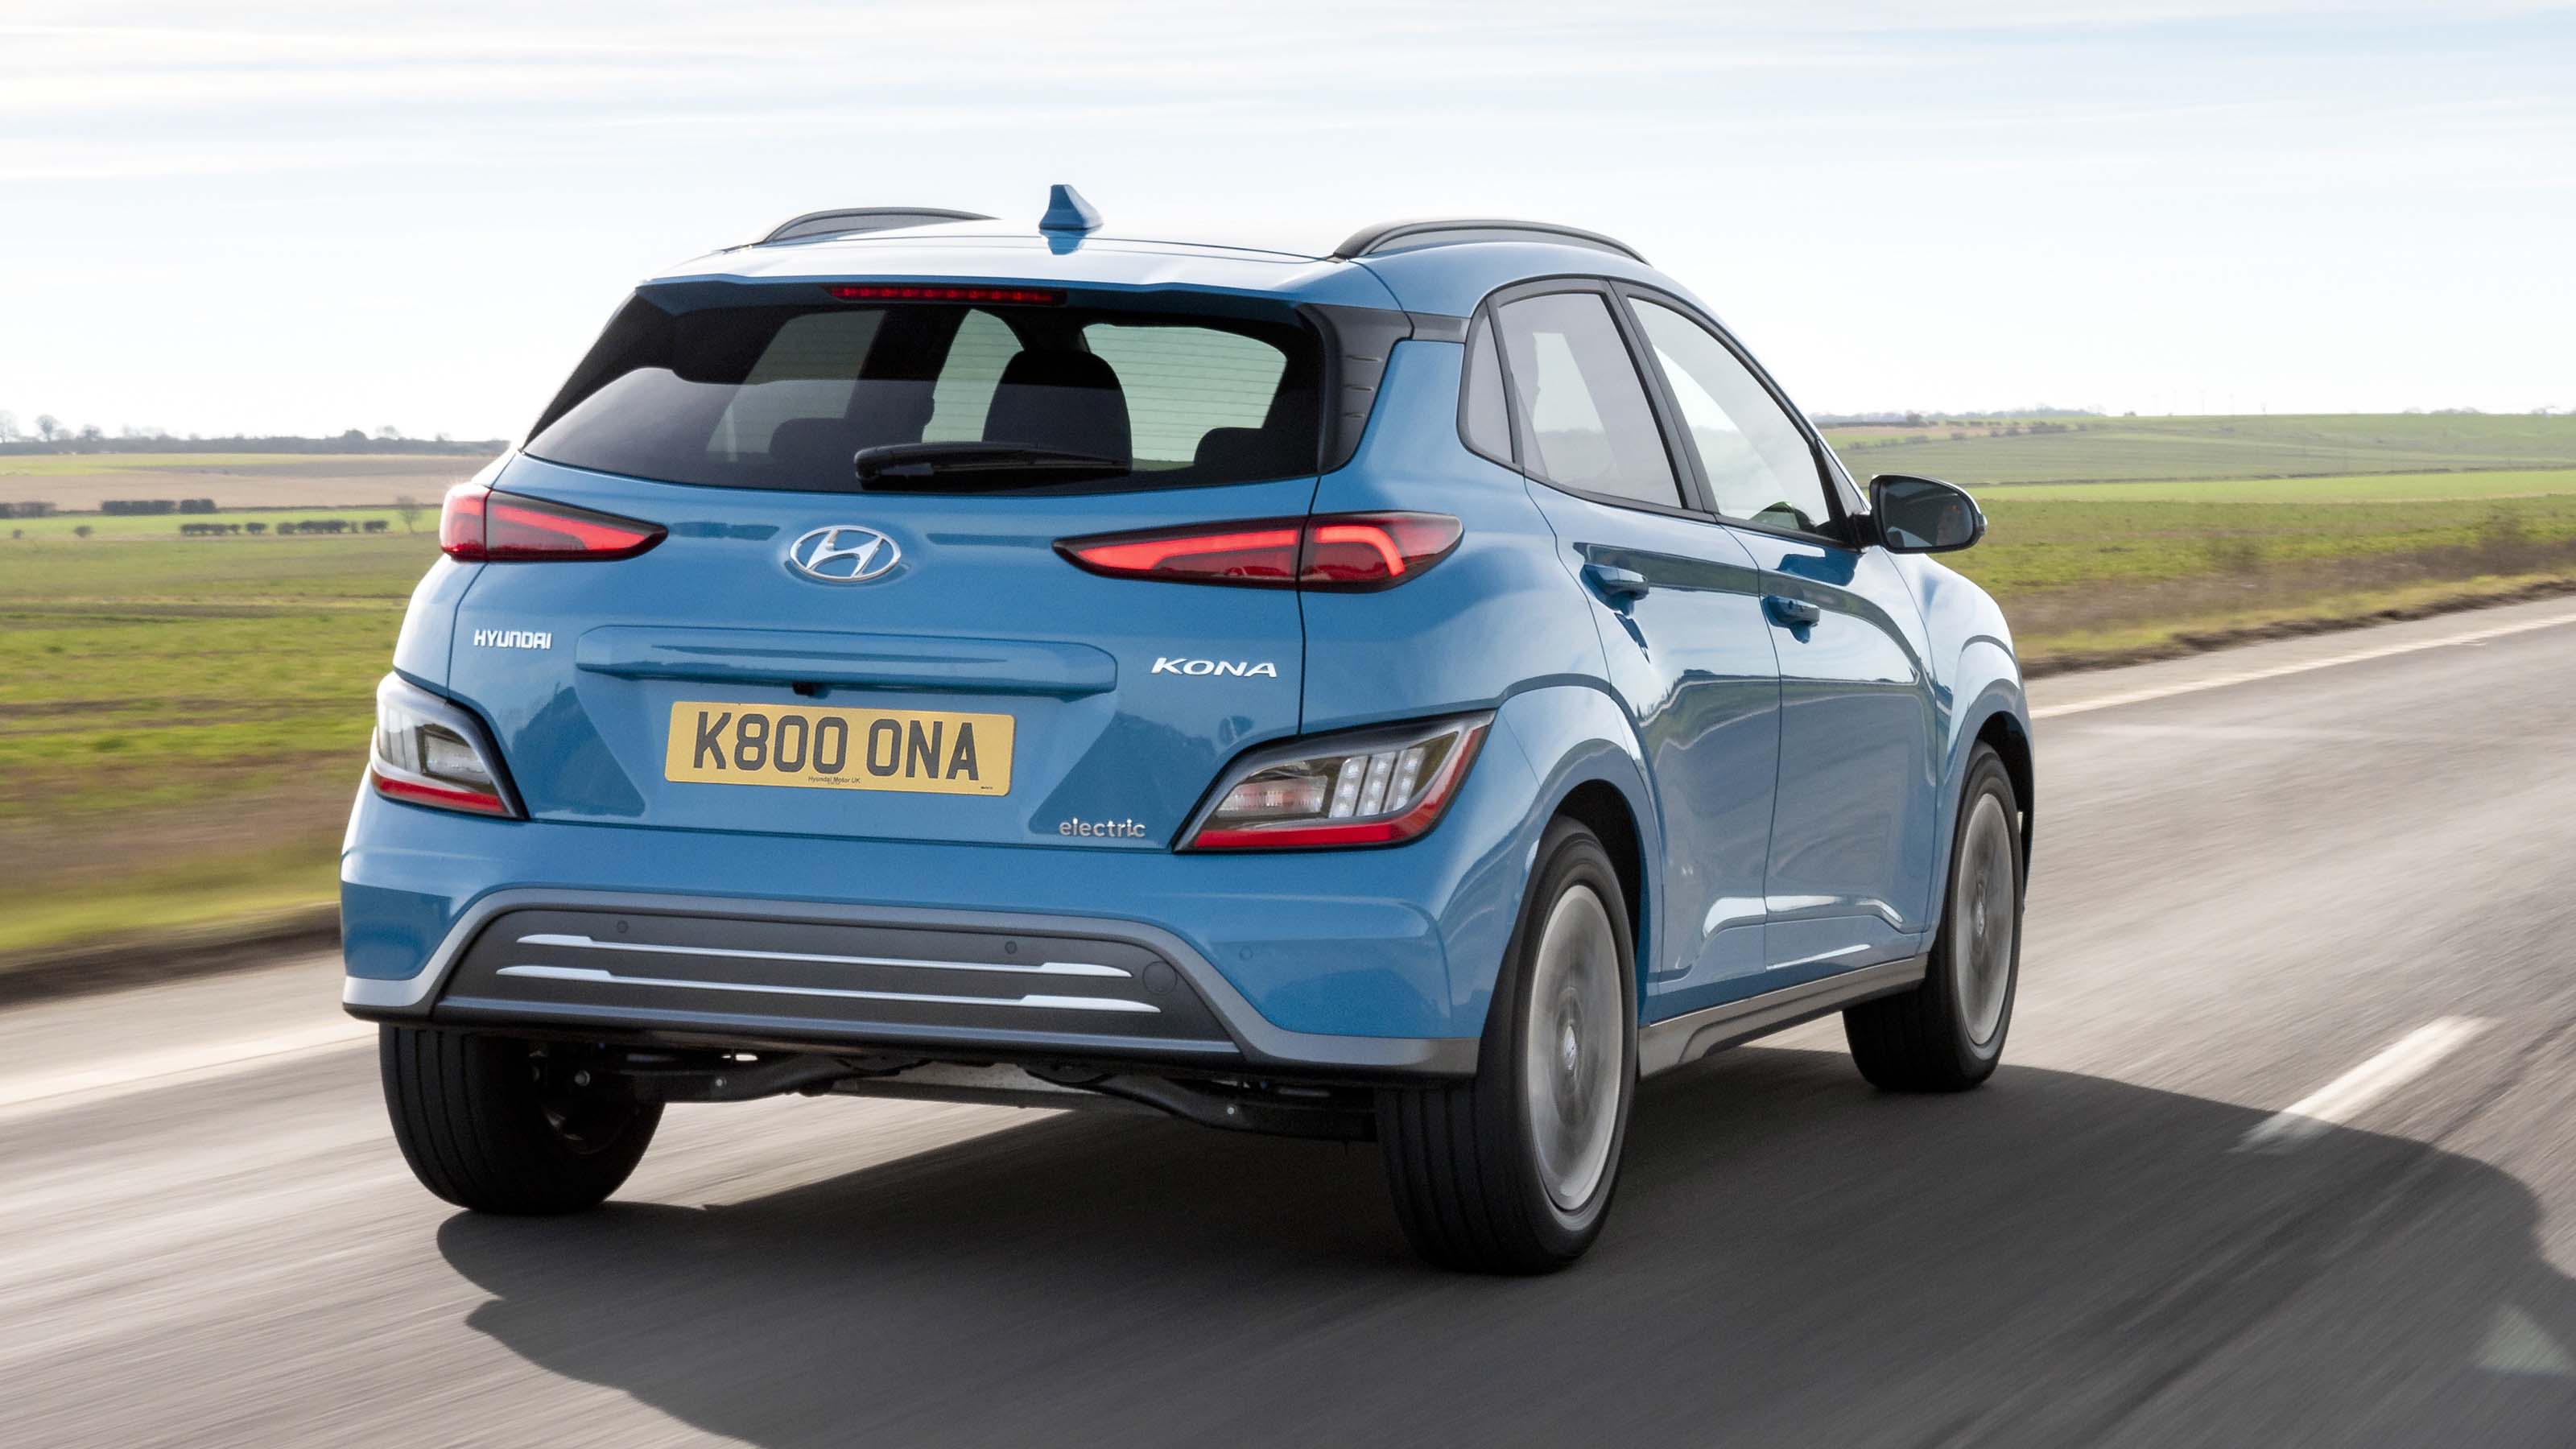 raid til eksil alene Hyundai Kona Electric performance, top speed & drive | DrivingElectric